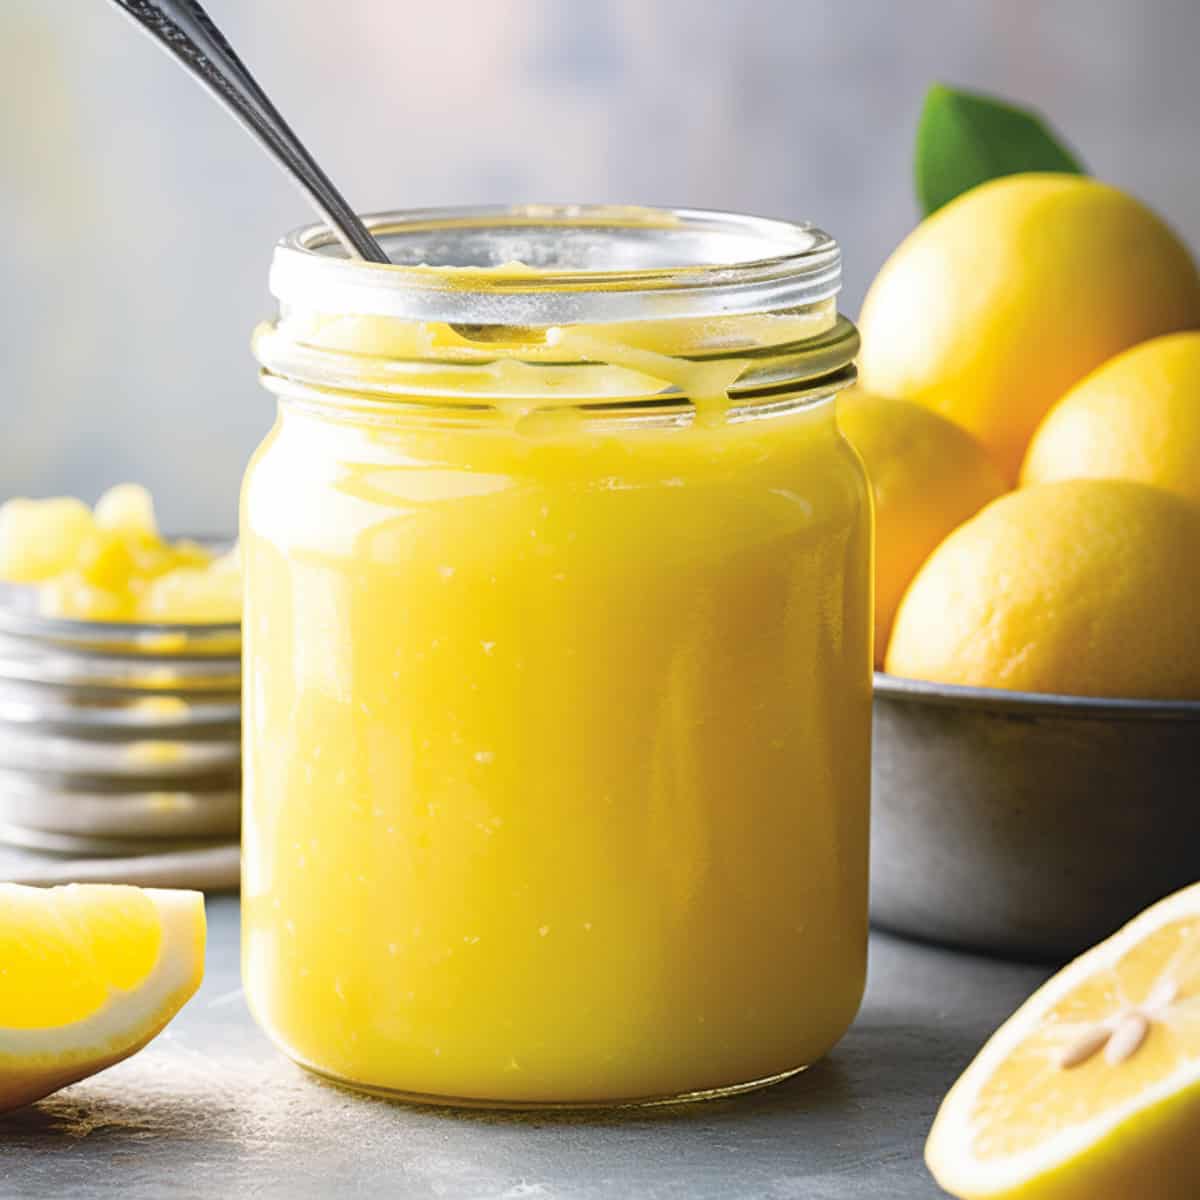 Lemon curd in a glass jar.